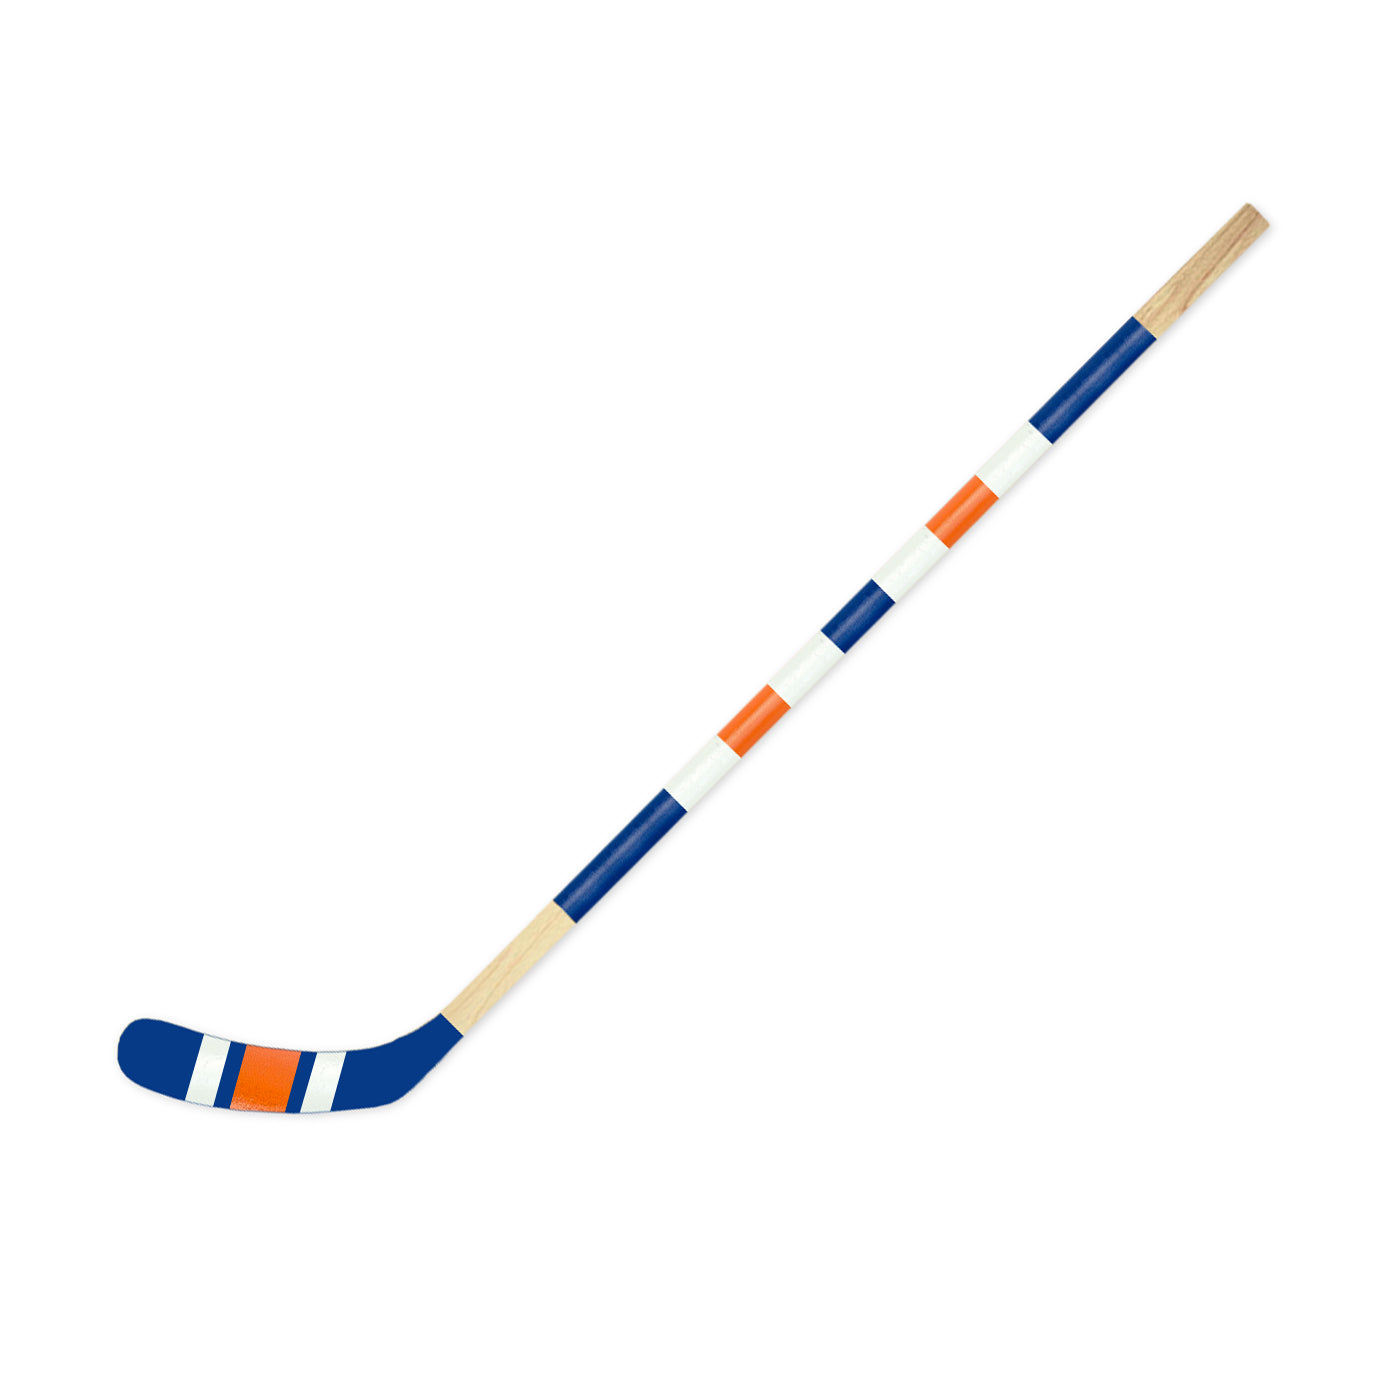 No. 4 Mitchell Hockey Stick